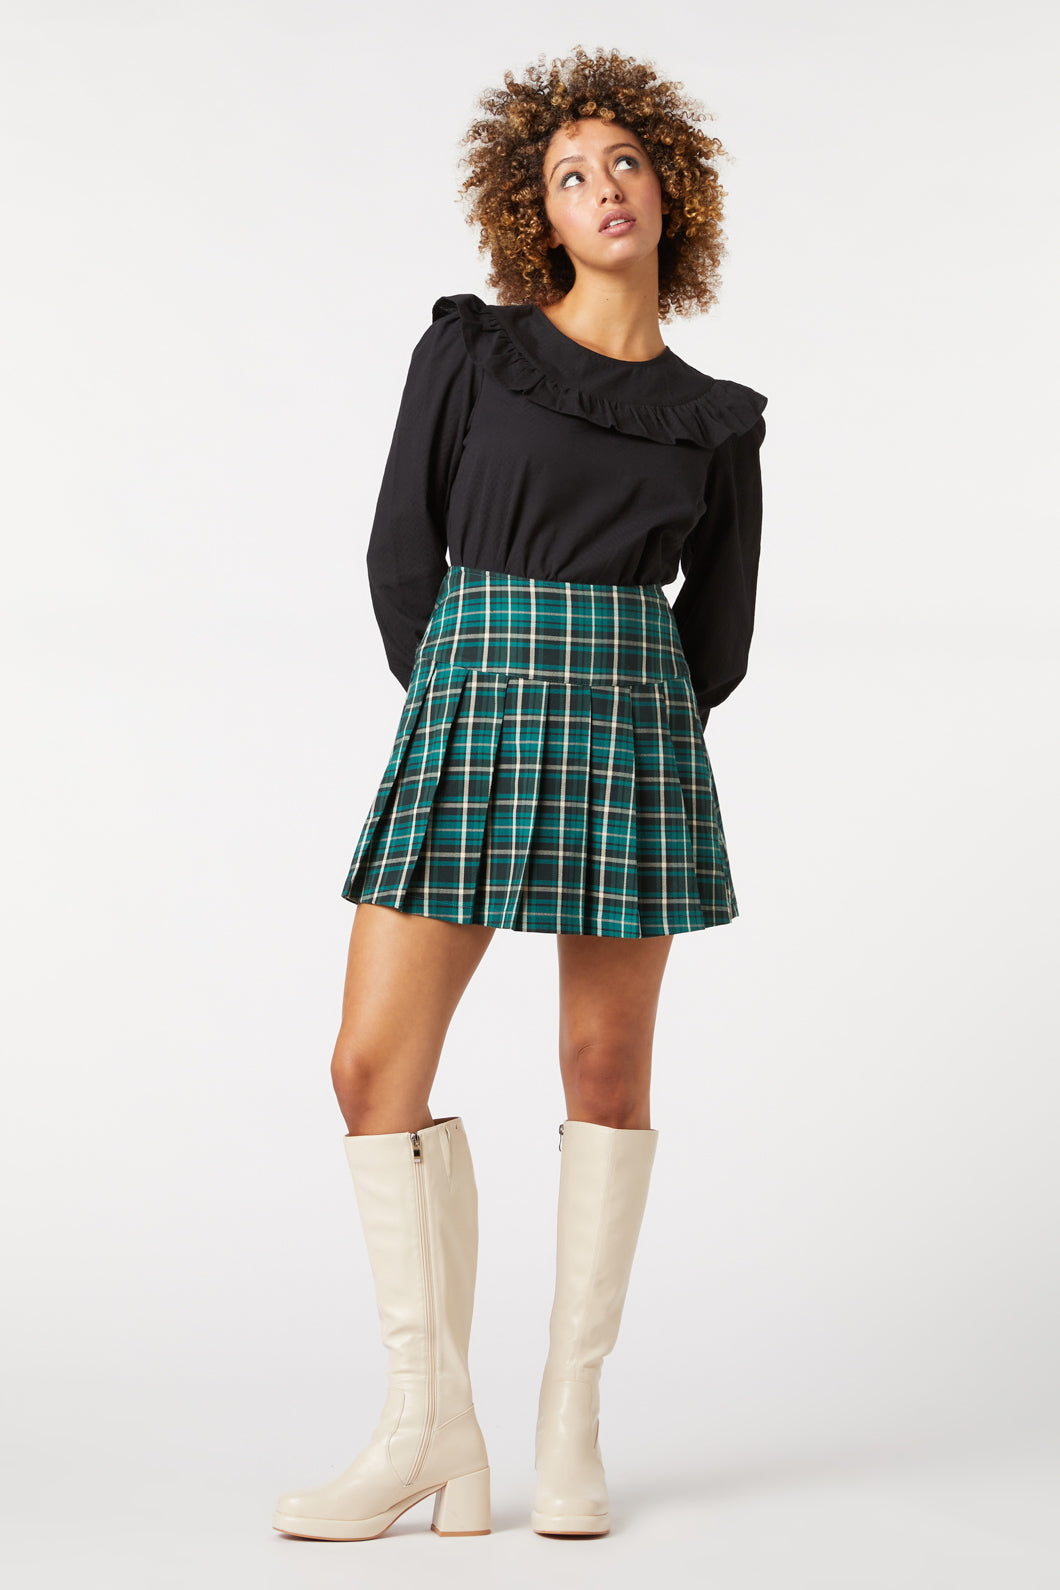 Unique21 pleated mini skirt in black